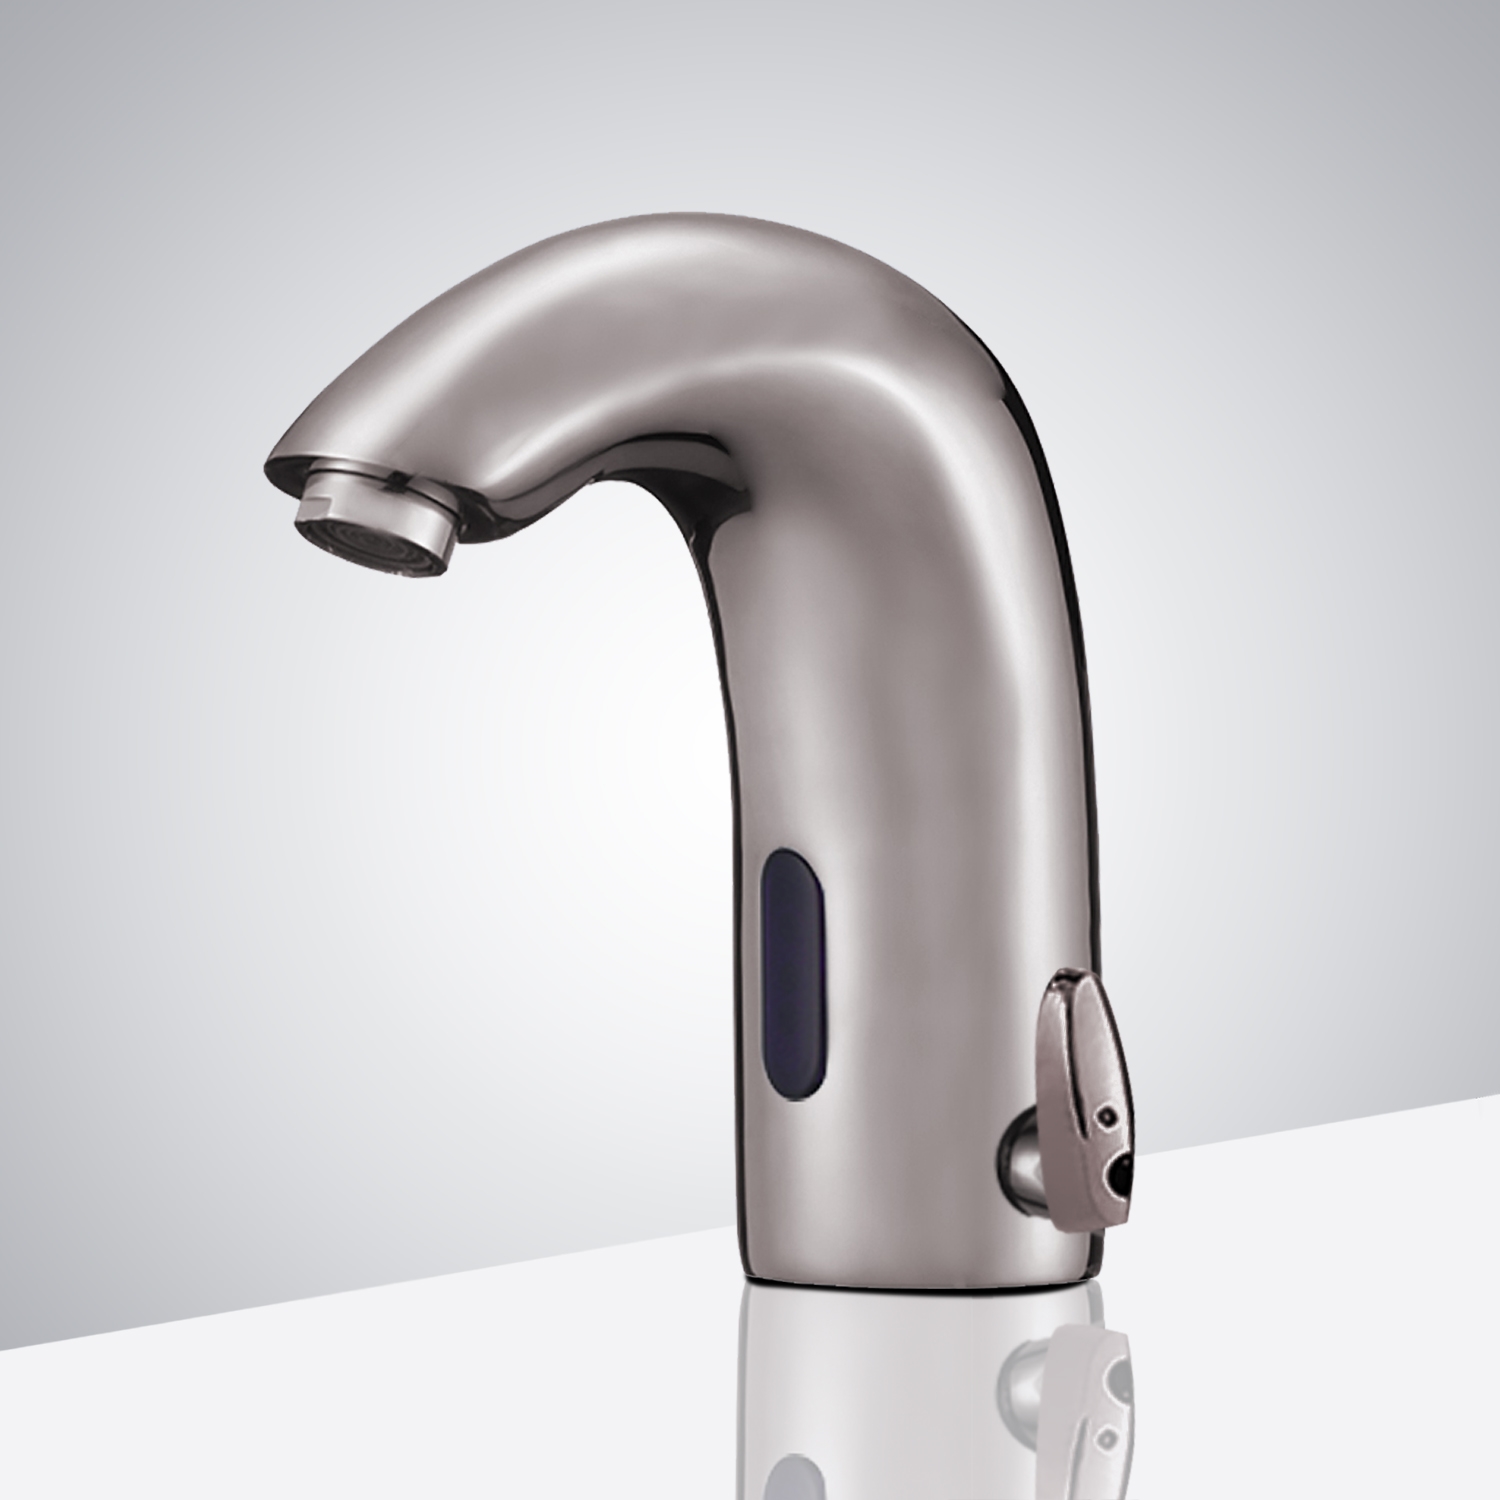 Fontana Brushed Nickel Commercial Temperature Control Automatic Hands Free Sensor Faucet